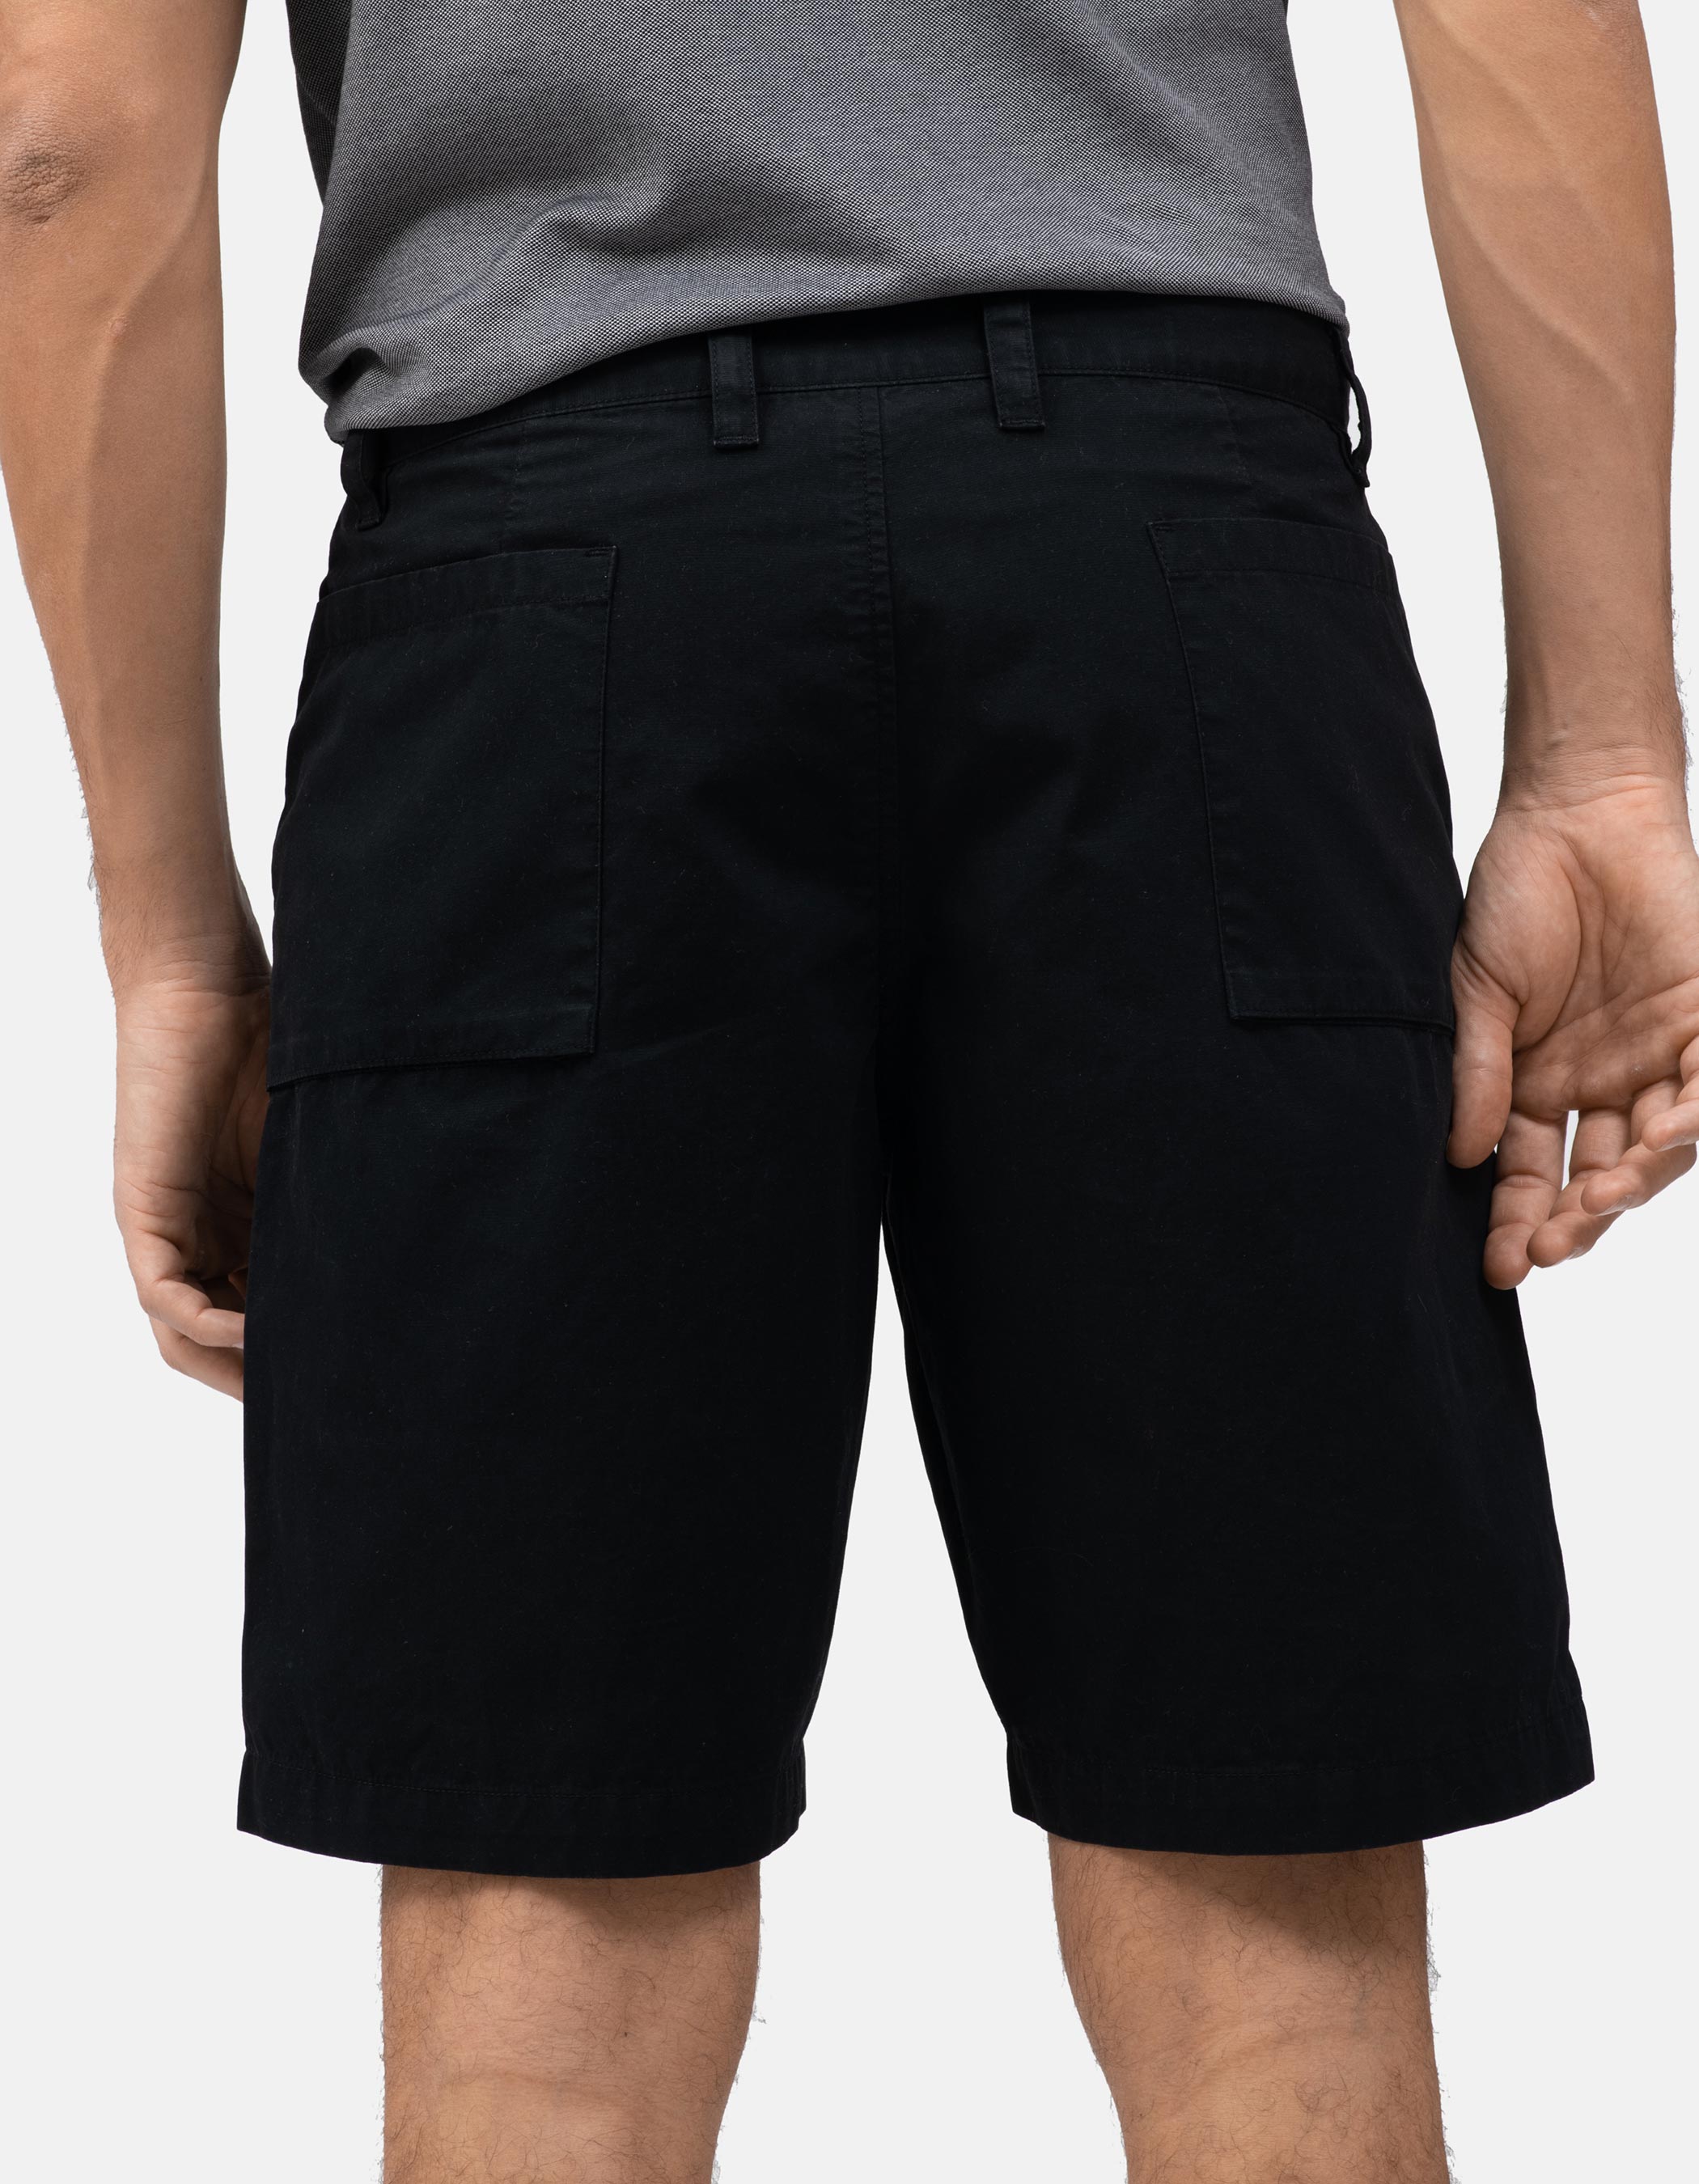 Bermuda shorts with hidden pocket 1